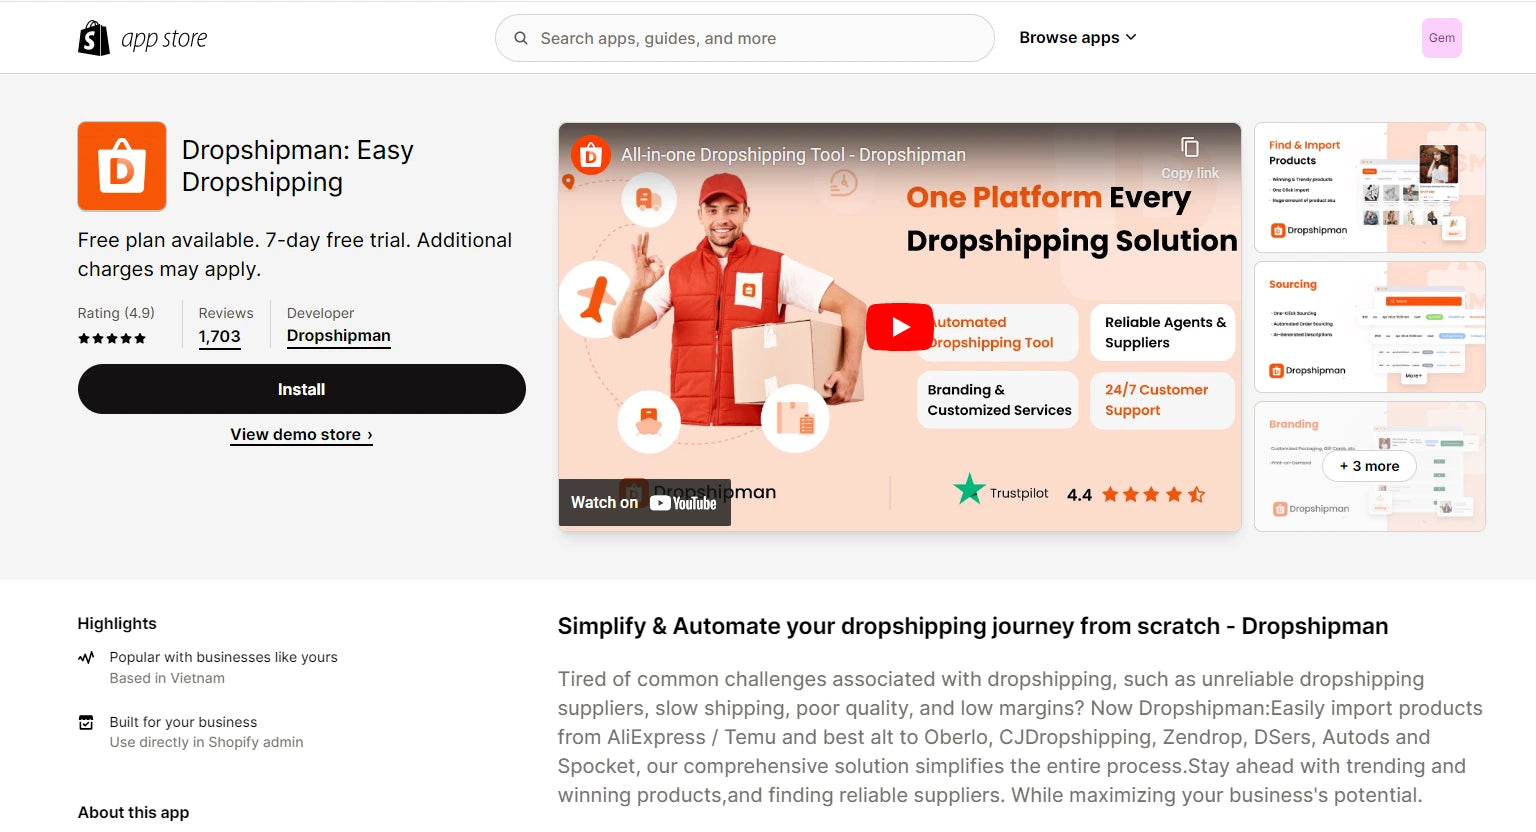 Dropshipman: Easy Dropshipping app in Shopify Admin page